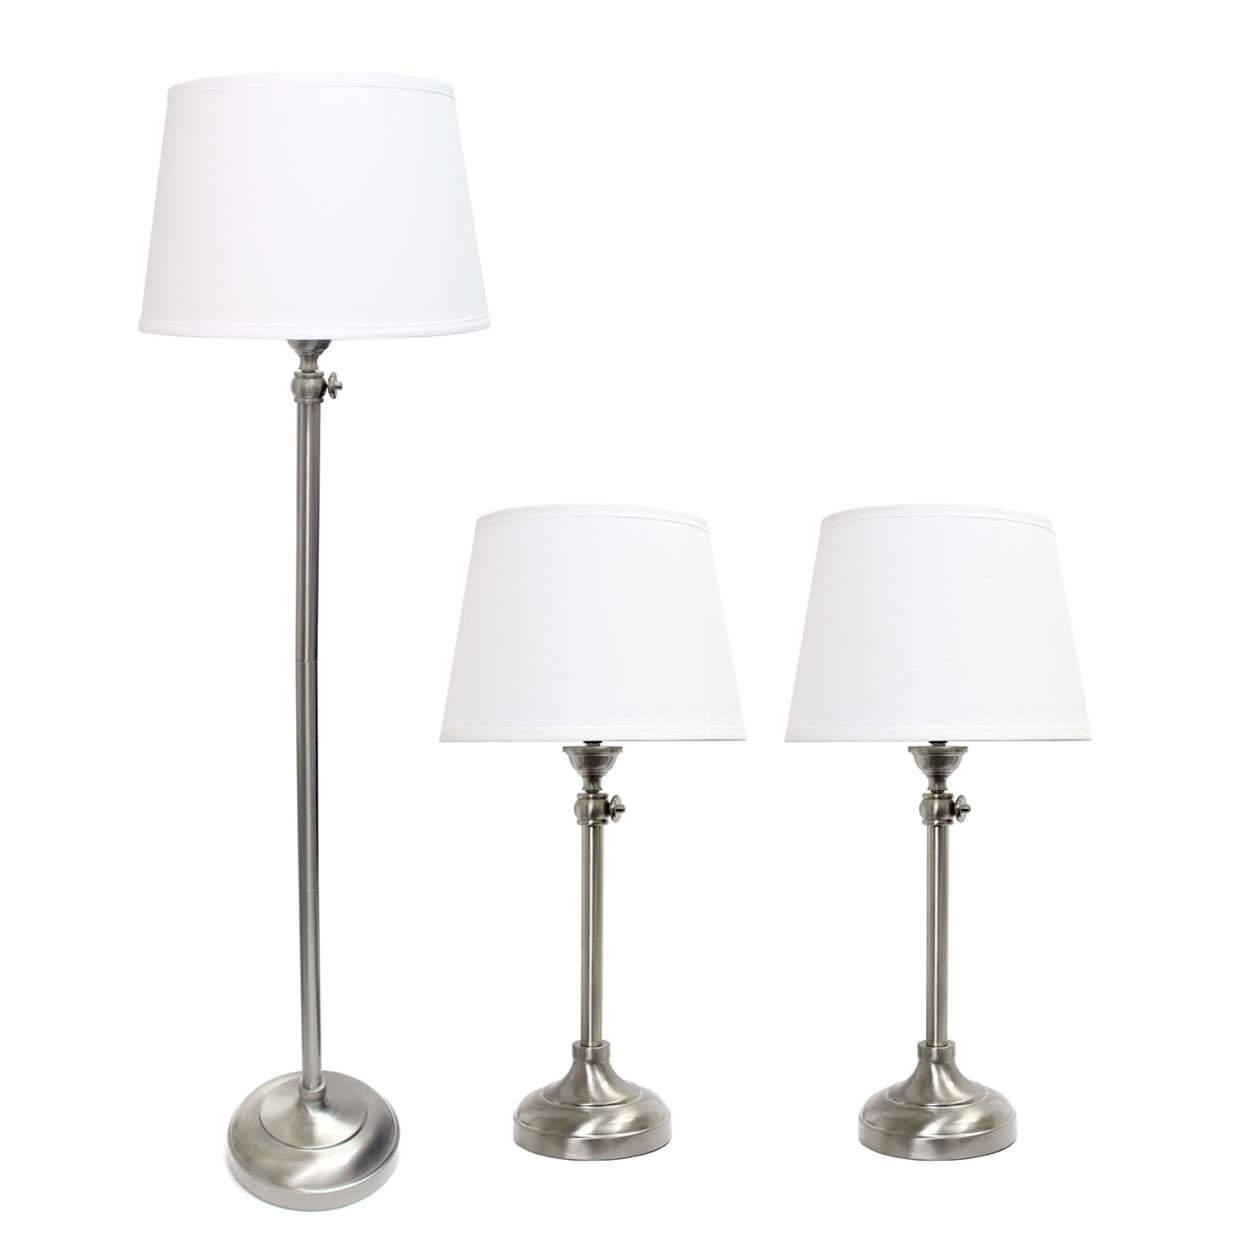 Alltherages Lc1017-bsn Elegant Designs Adjustable Lamps - Brushed Nickel, Pack Of 3